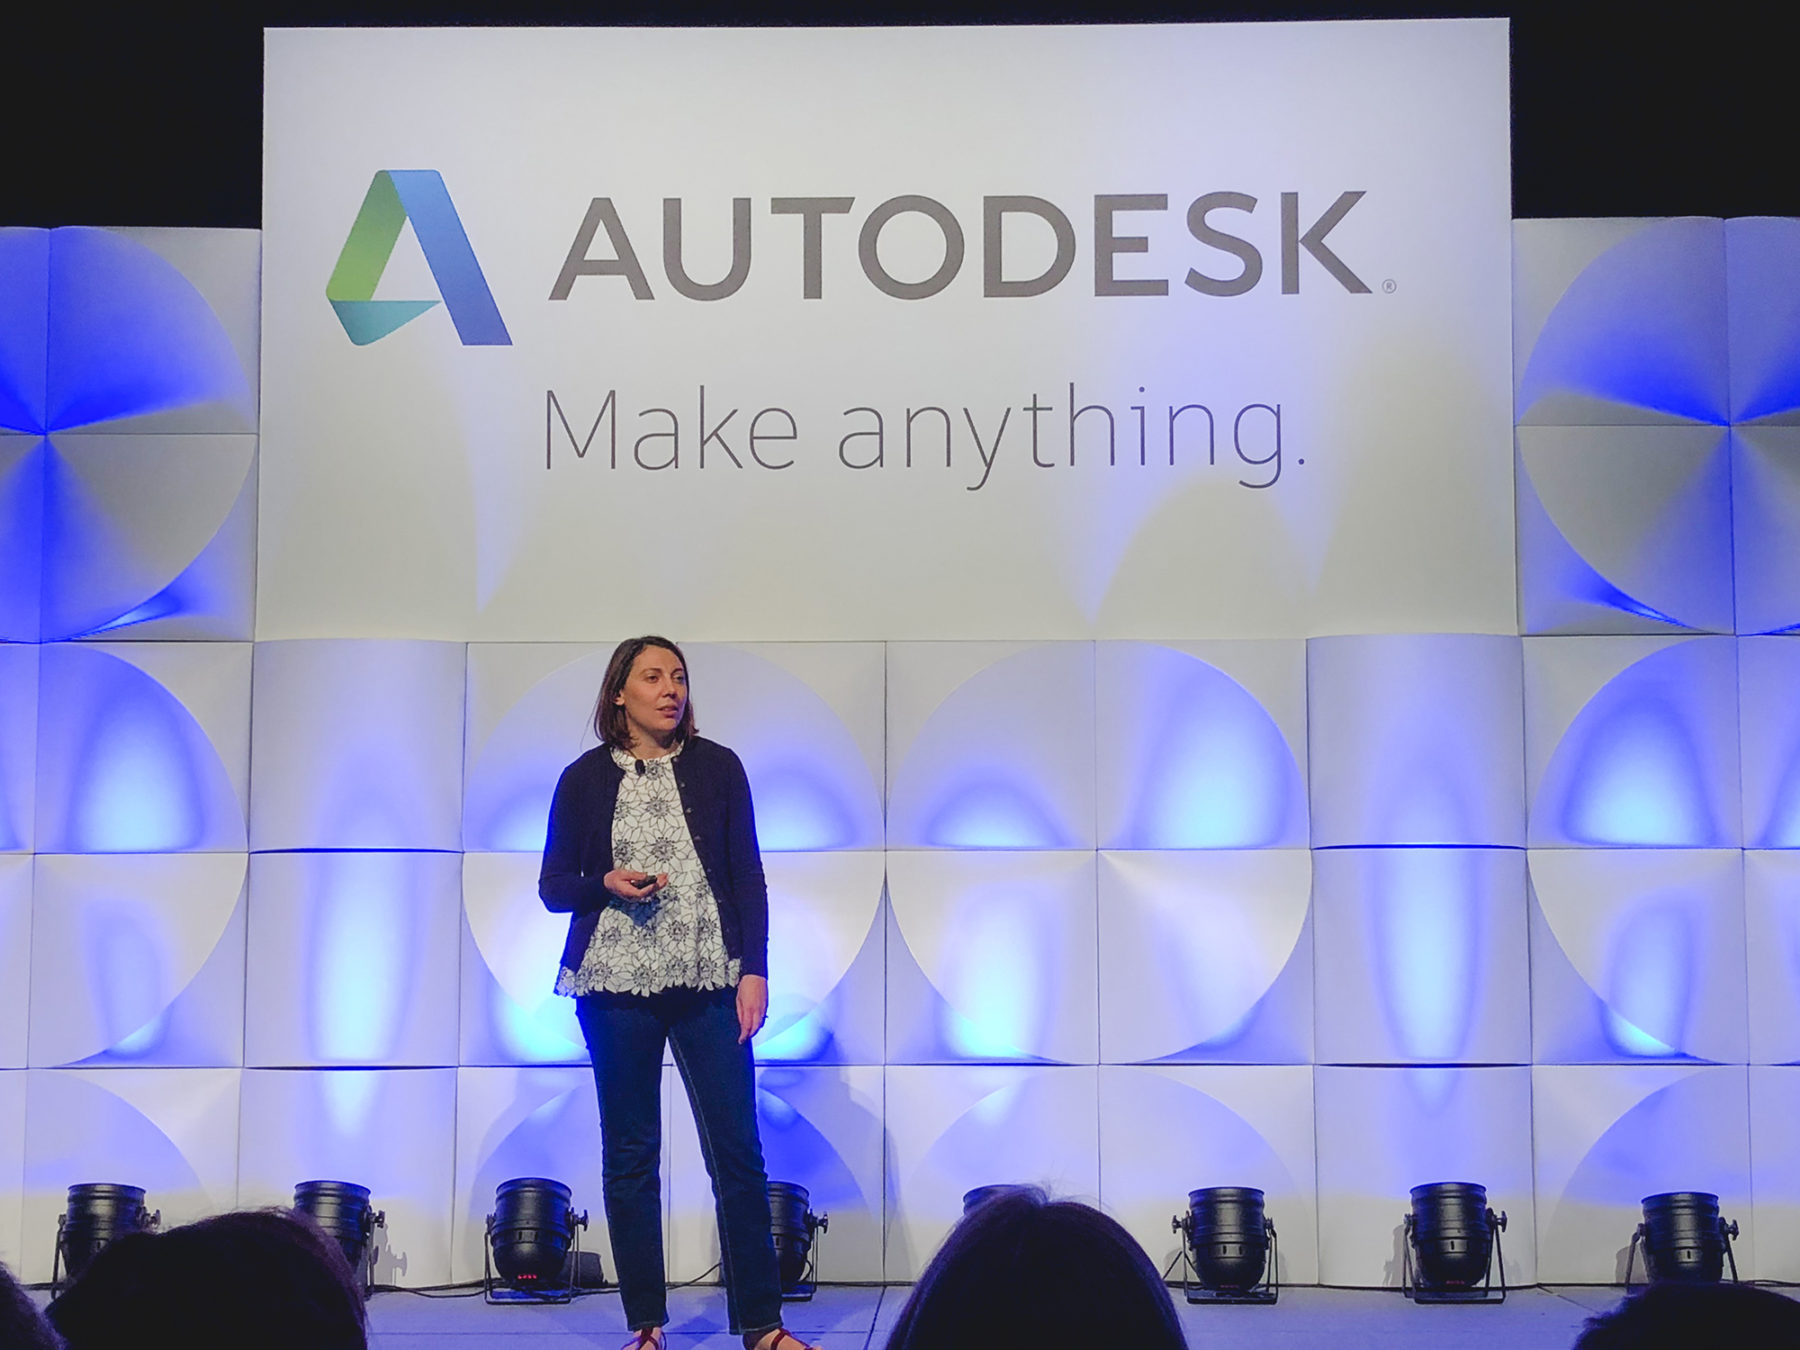 Designer speaks in front of large Autodesk sign on stage